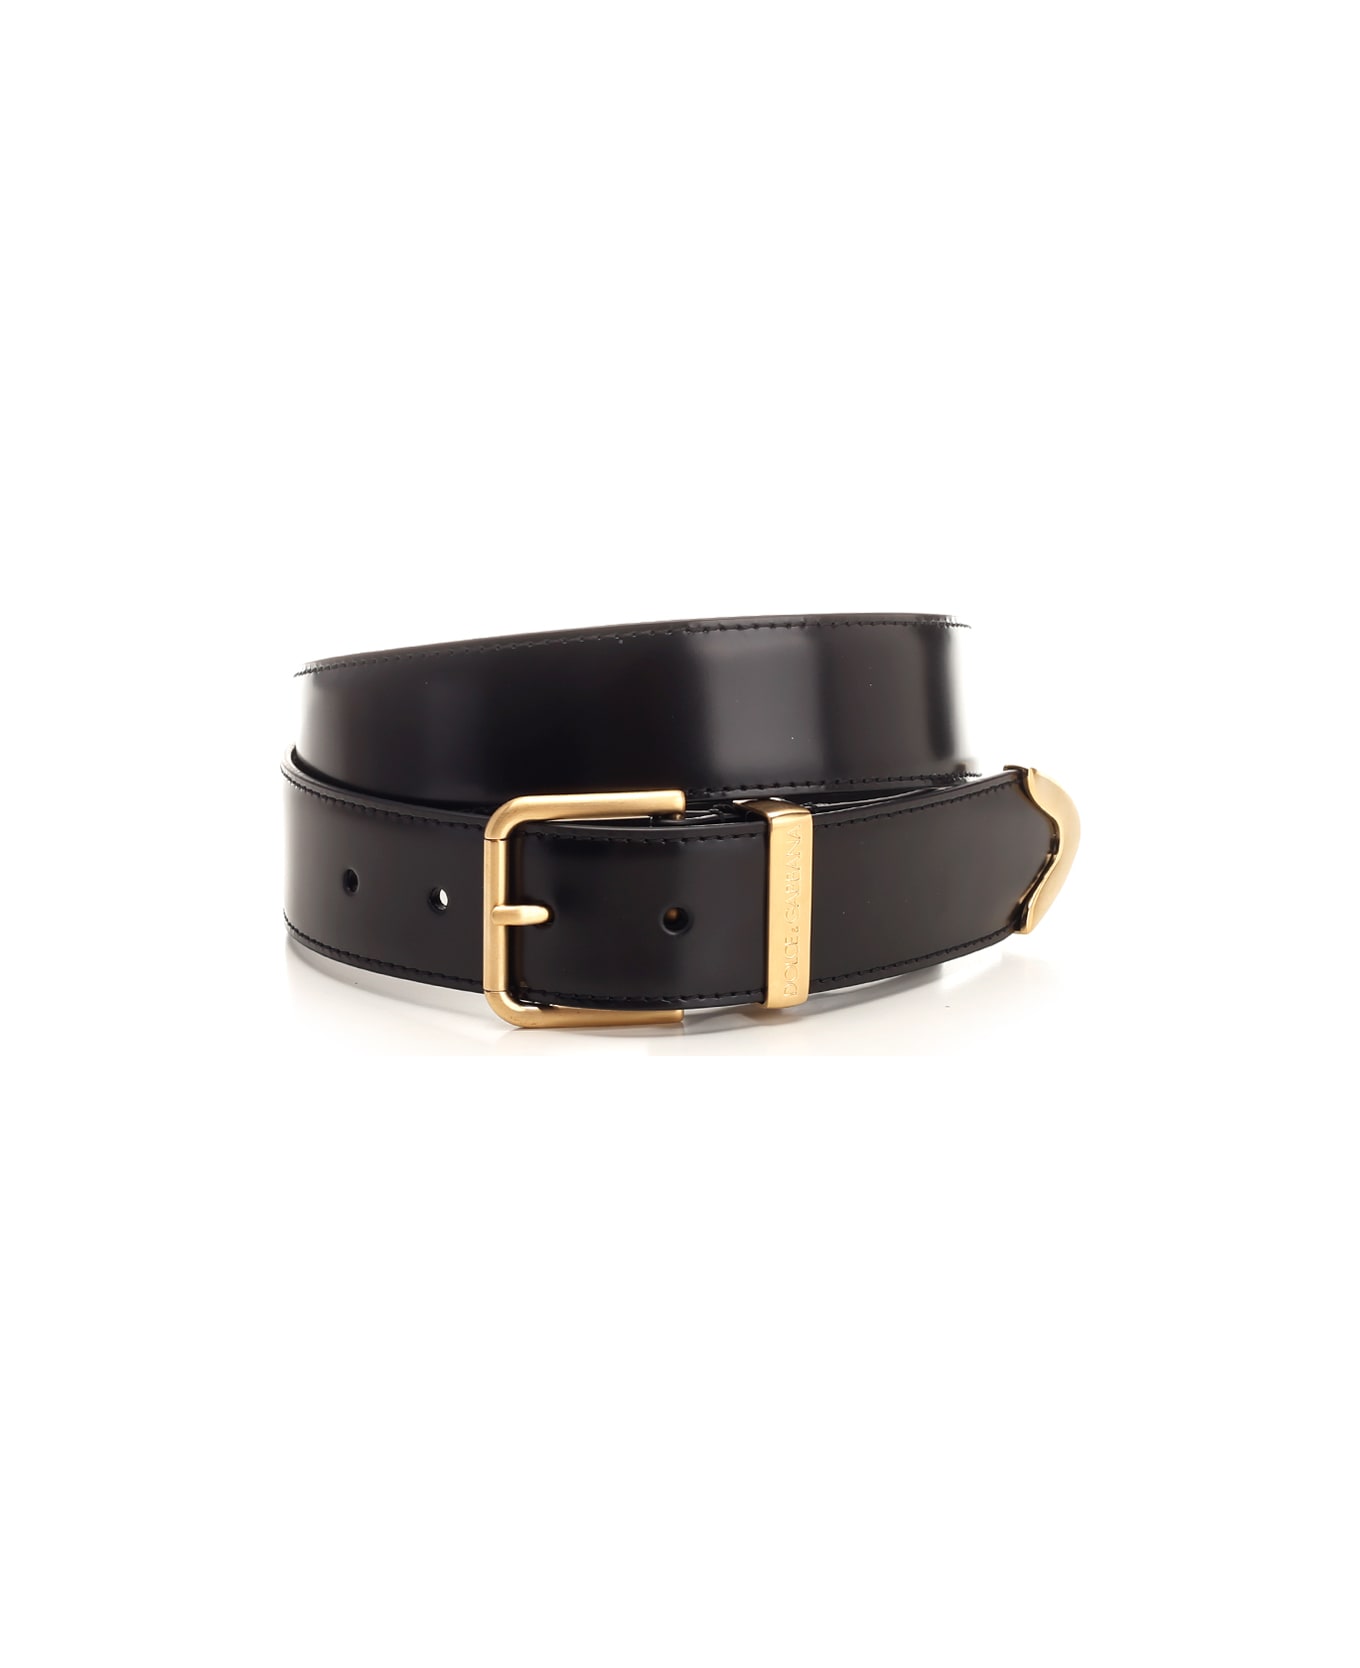 Dolce & Gabbana Black Belt With Golden Buckle - black